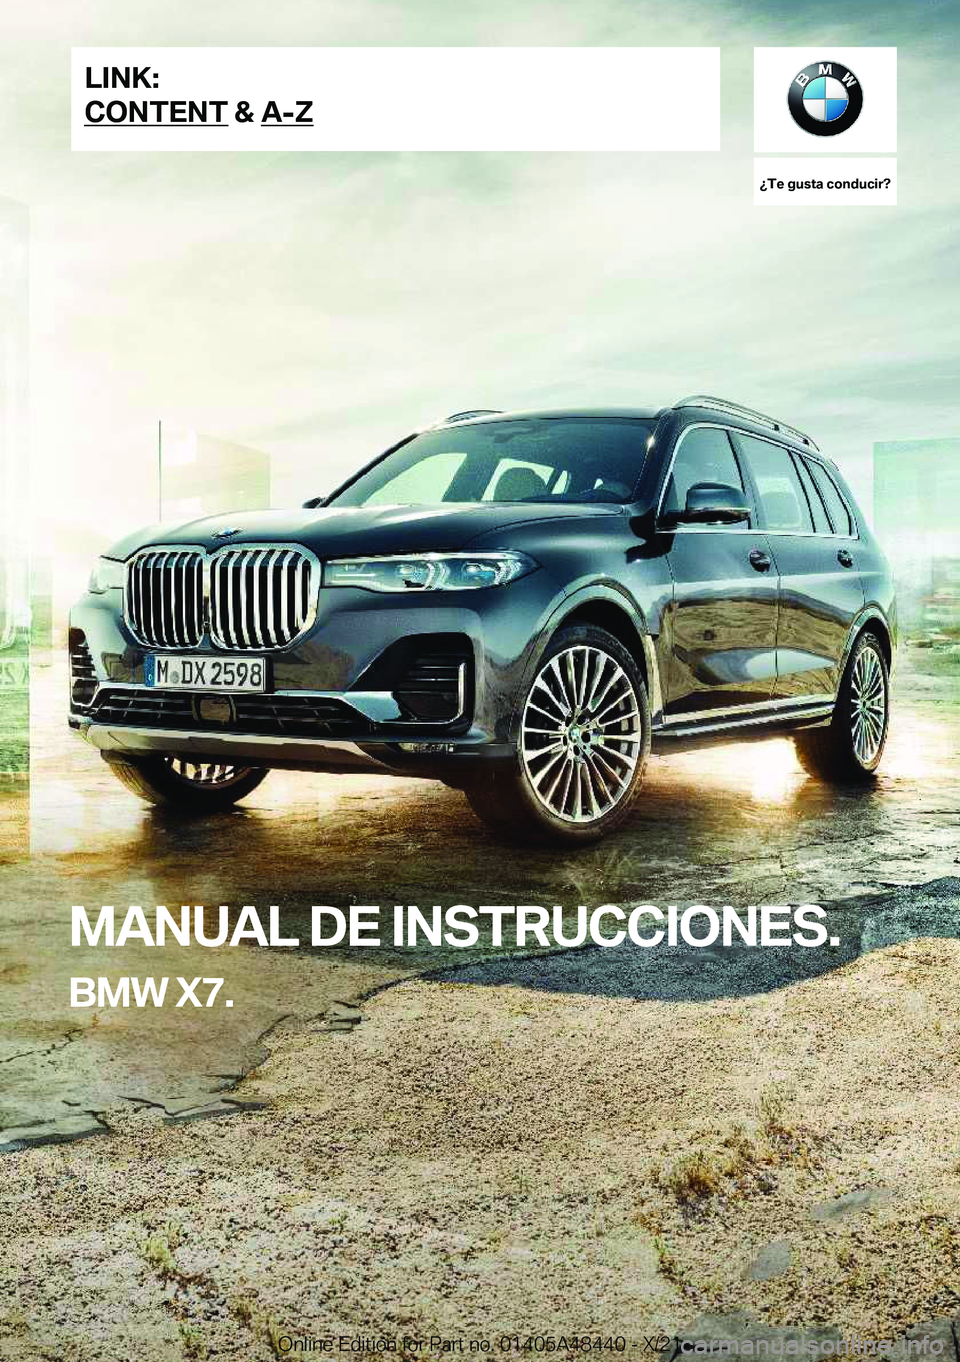 BMW X7 2022  Manuales de Empleo (in Spanish) ��T�e��g�u�s�t�a��c�o�n�d�u�c�i�r� 
�M�A�N�U�A�L��D�E��I�N�S�T�R�U�C�C�I�O�N�E�S�.
�B�M�W��X�7�.�L�I�N�K�:
�C�O�N�T�E�N�T��&��A�-�Z�O�n�l�i�n�e��E�d�i�t�i�o�n��f�o�r��P�a�r�t��n�o�.��0�1�